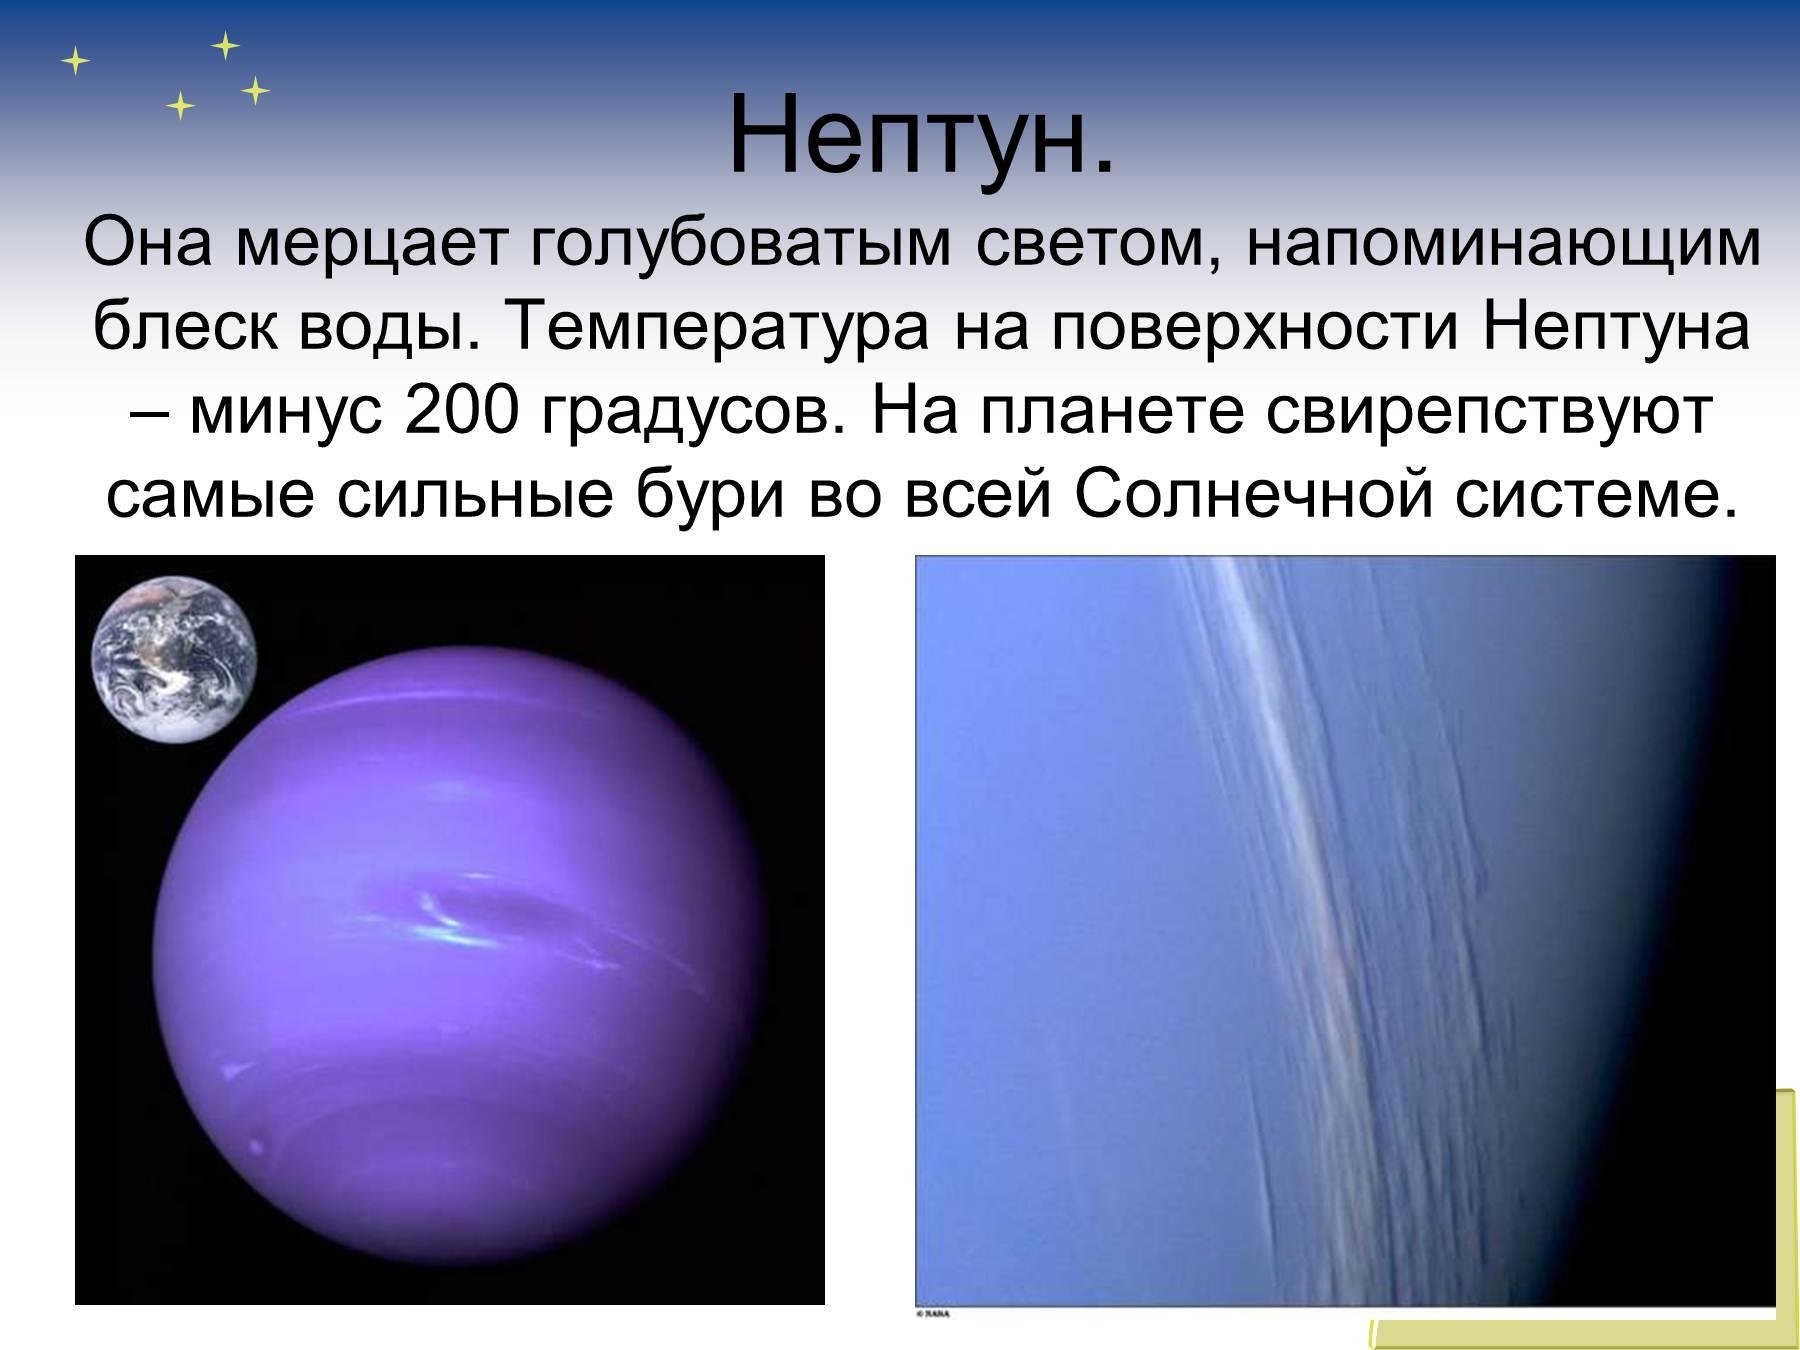 Нептун свет. Нептун презентация. Нептун (Планета). Температура Нептуна. Презентация на тему Планета Нептун.